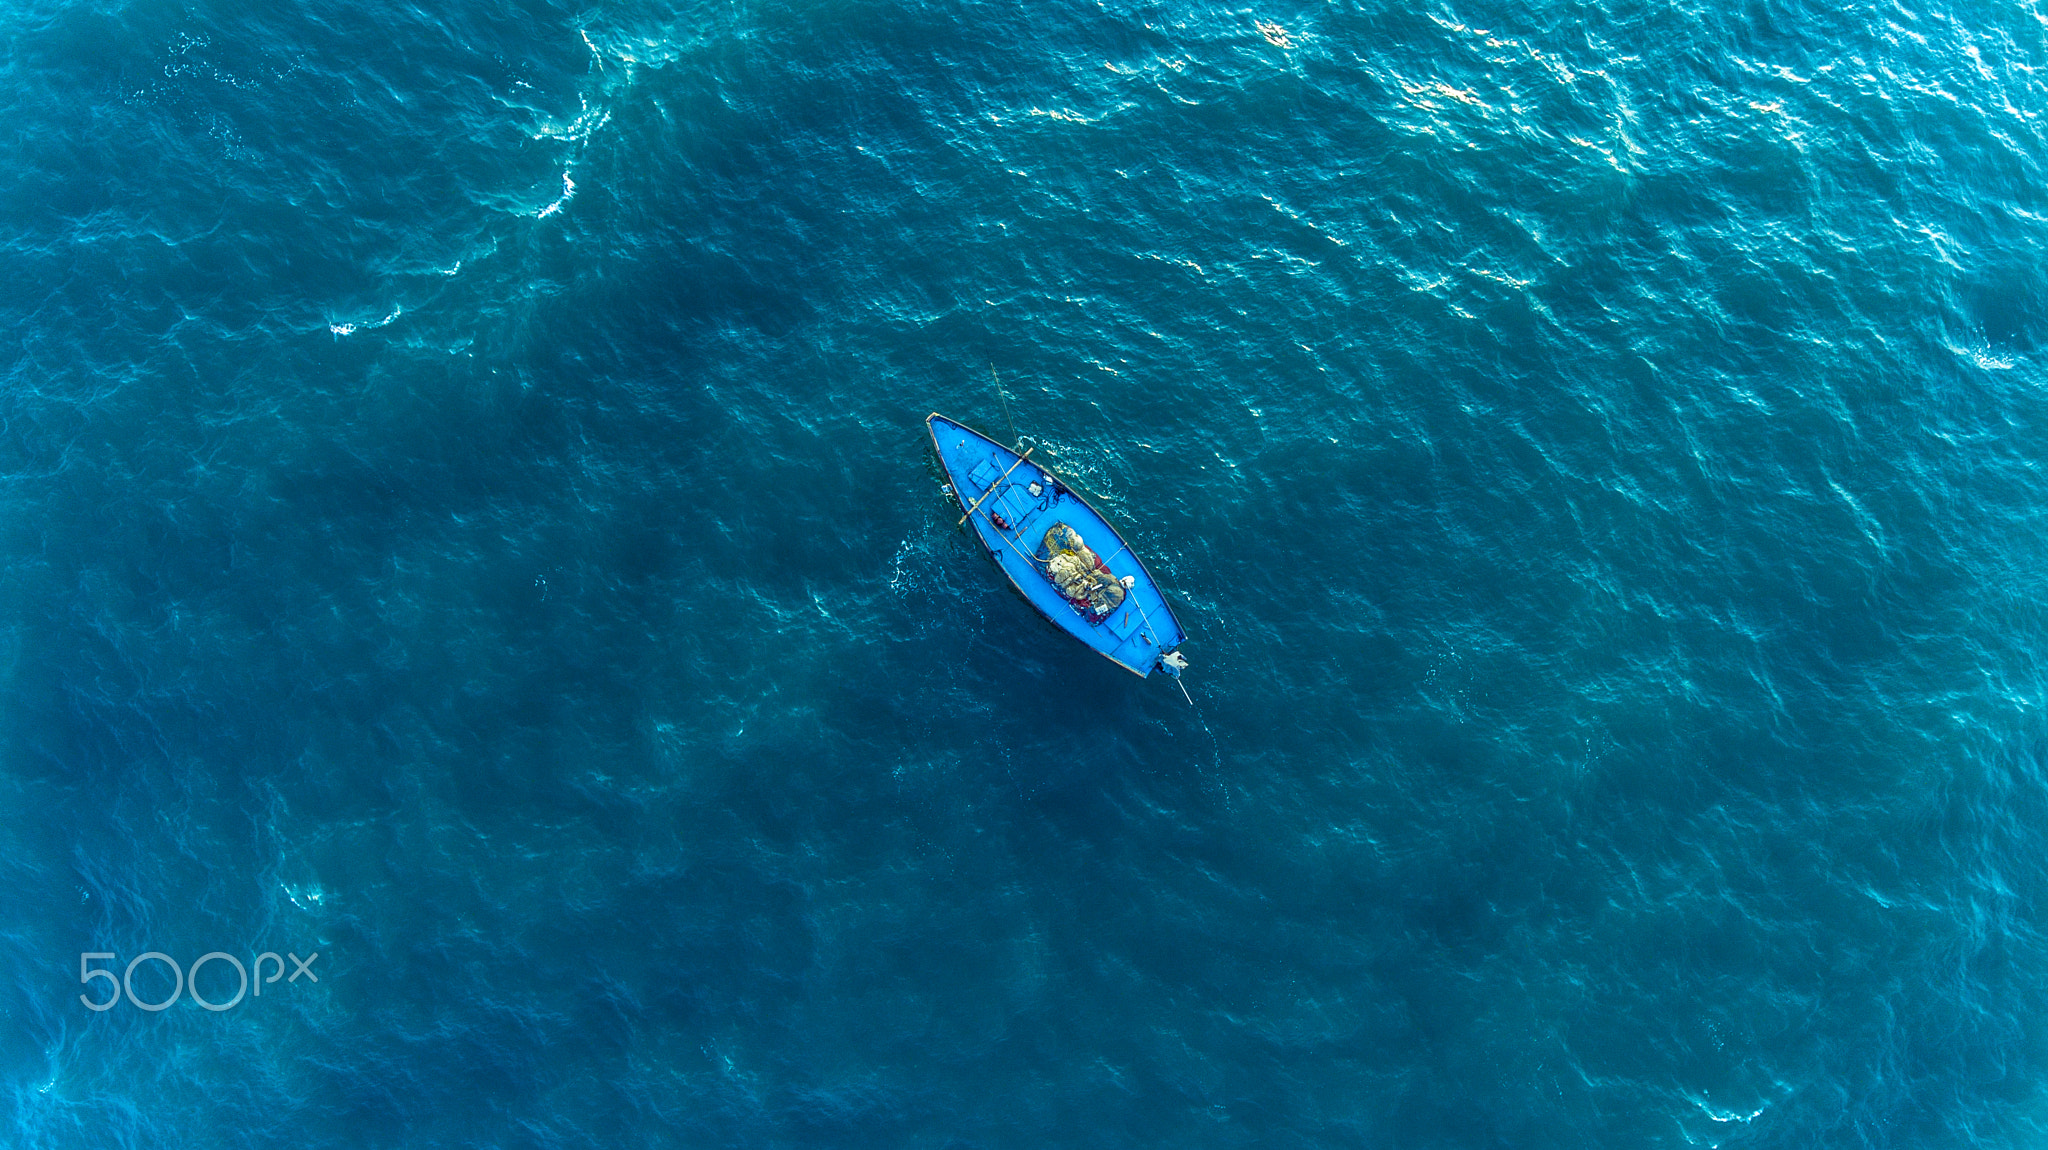 General 2048x1150 aerial view vehicle water boat shark dangerous blue